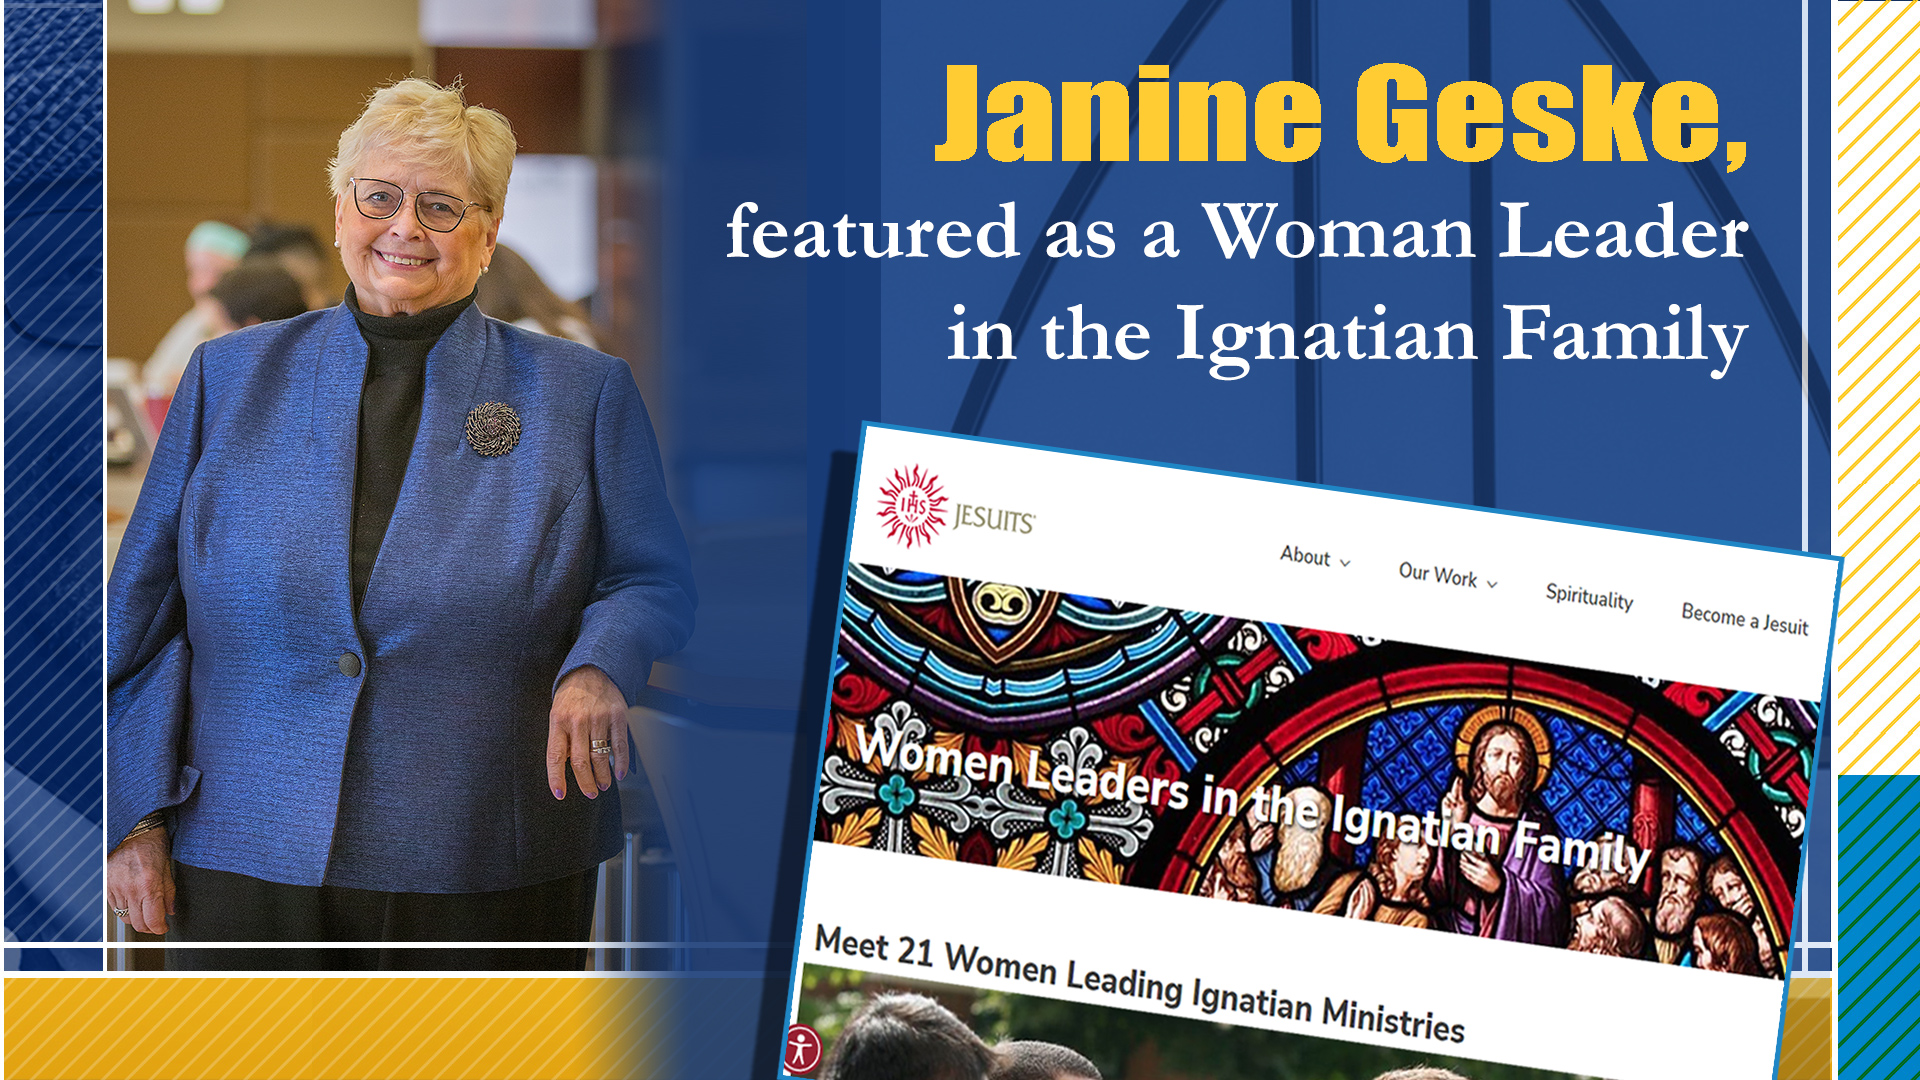 Janine Geske Ignatian Woman Leader